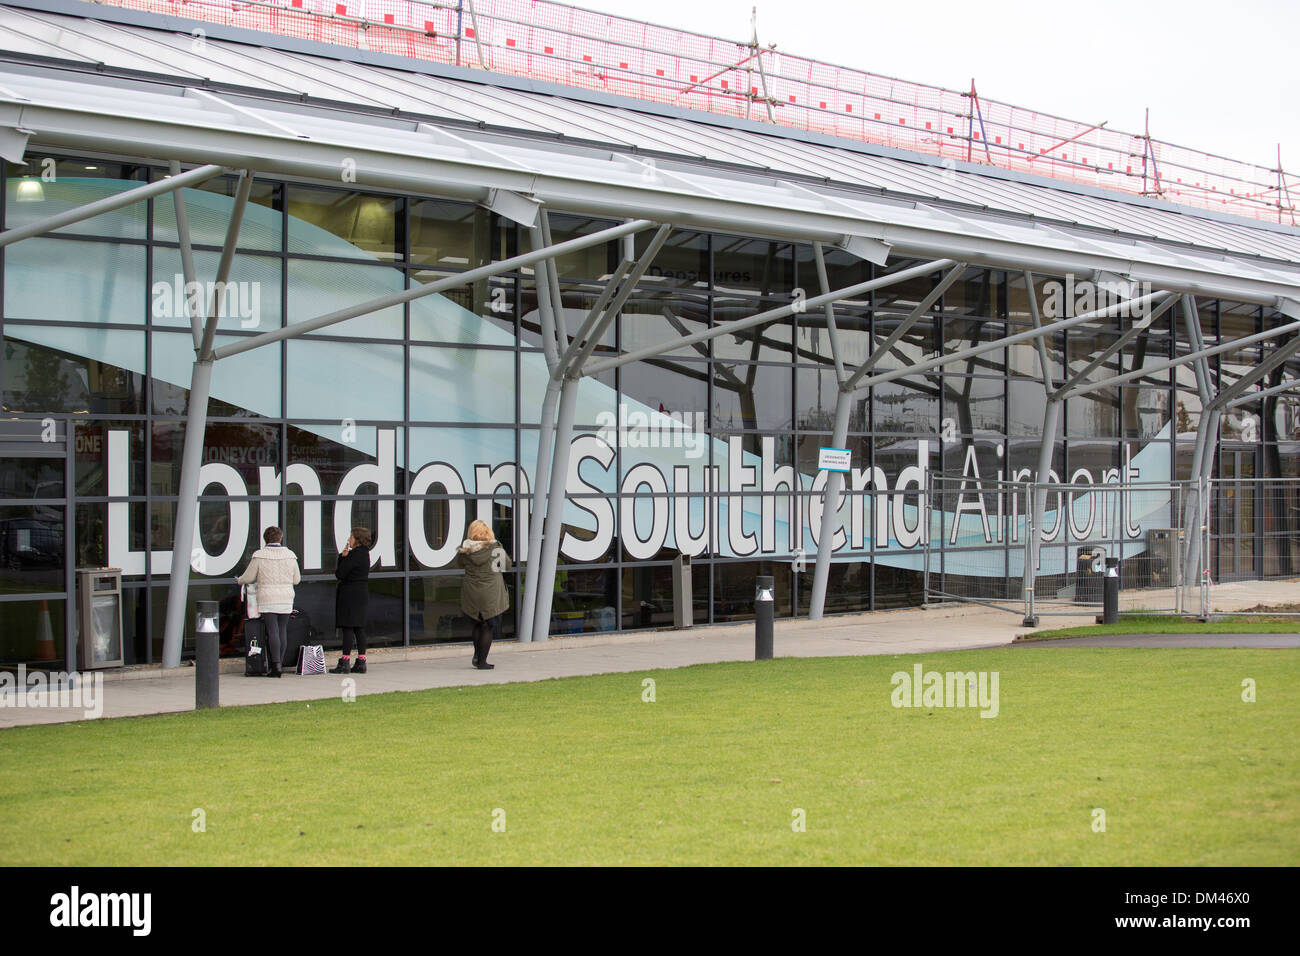 29.11.2013 London Southend Airport Schild am Terminalgebäude Stockfoto